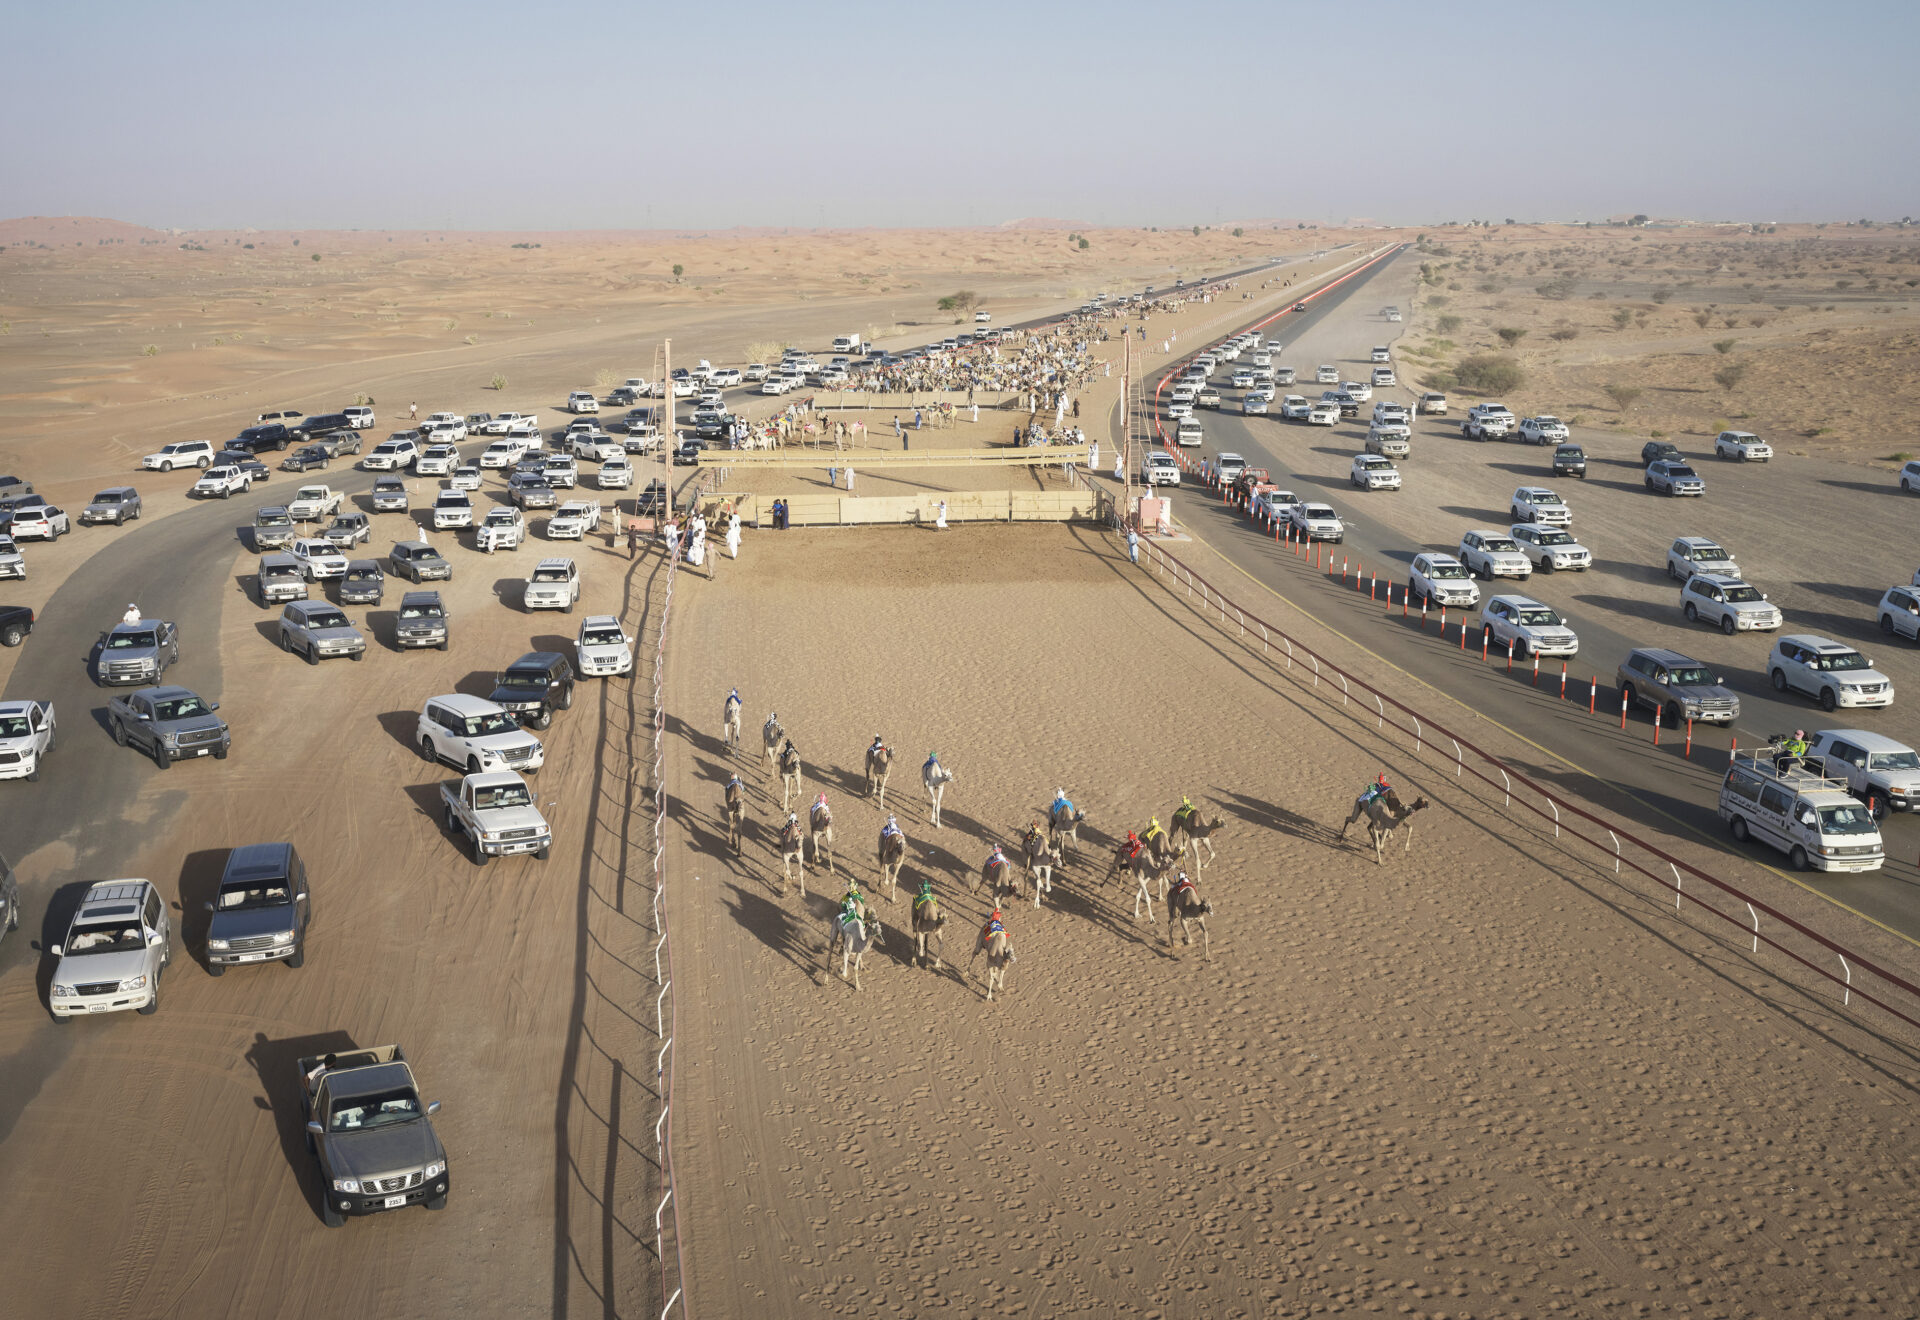 Camel Racing Playground United Arab Emirates 2021